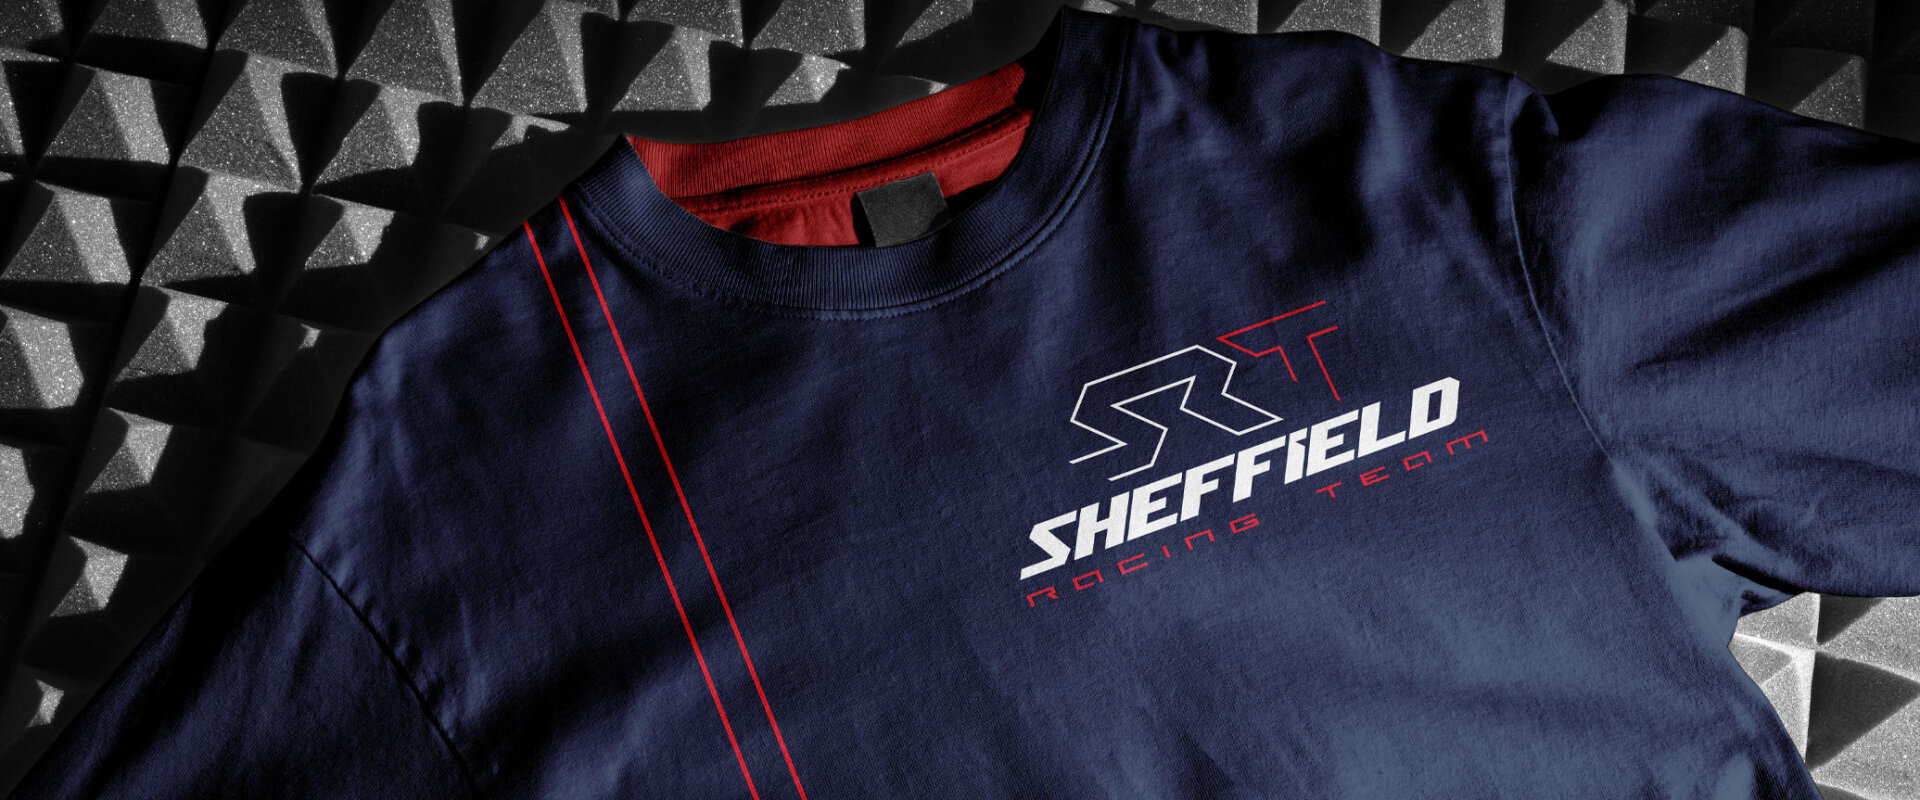 Sheffield Racing Team #3